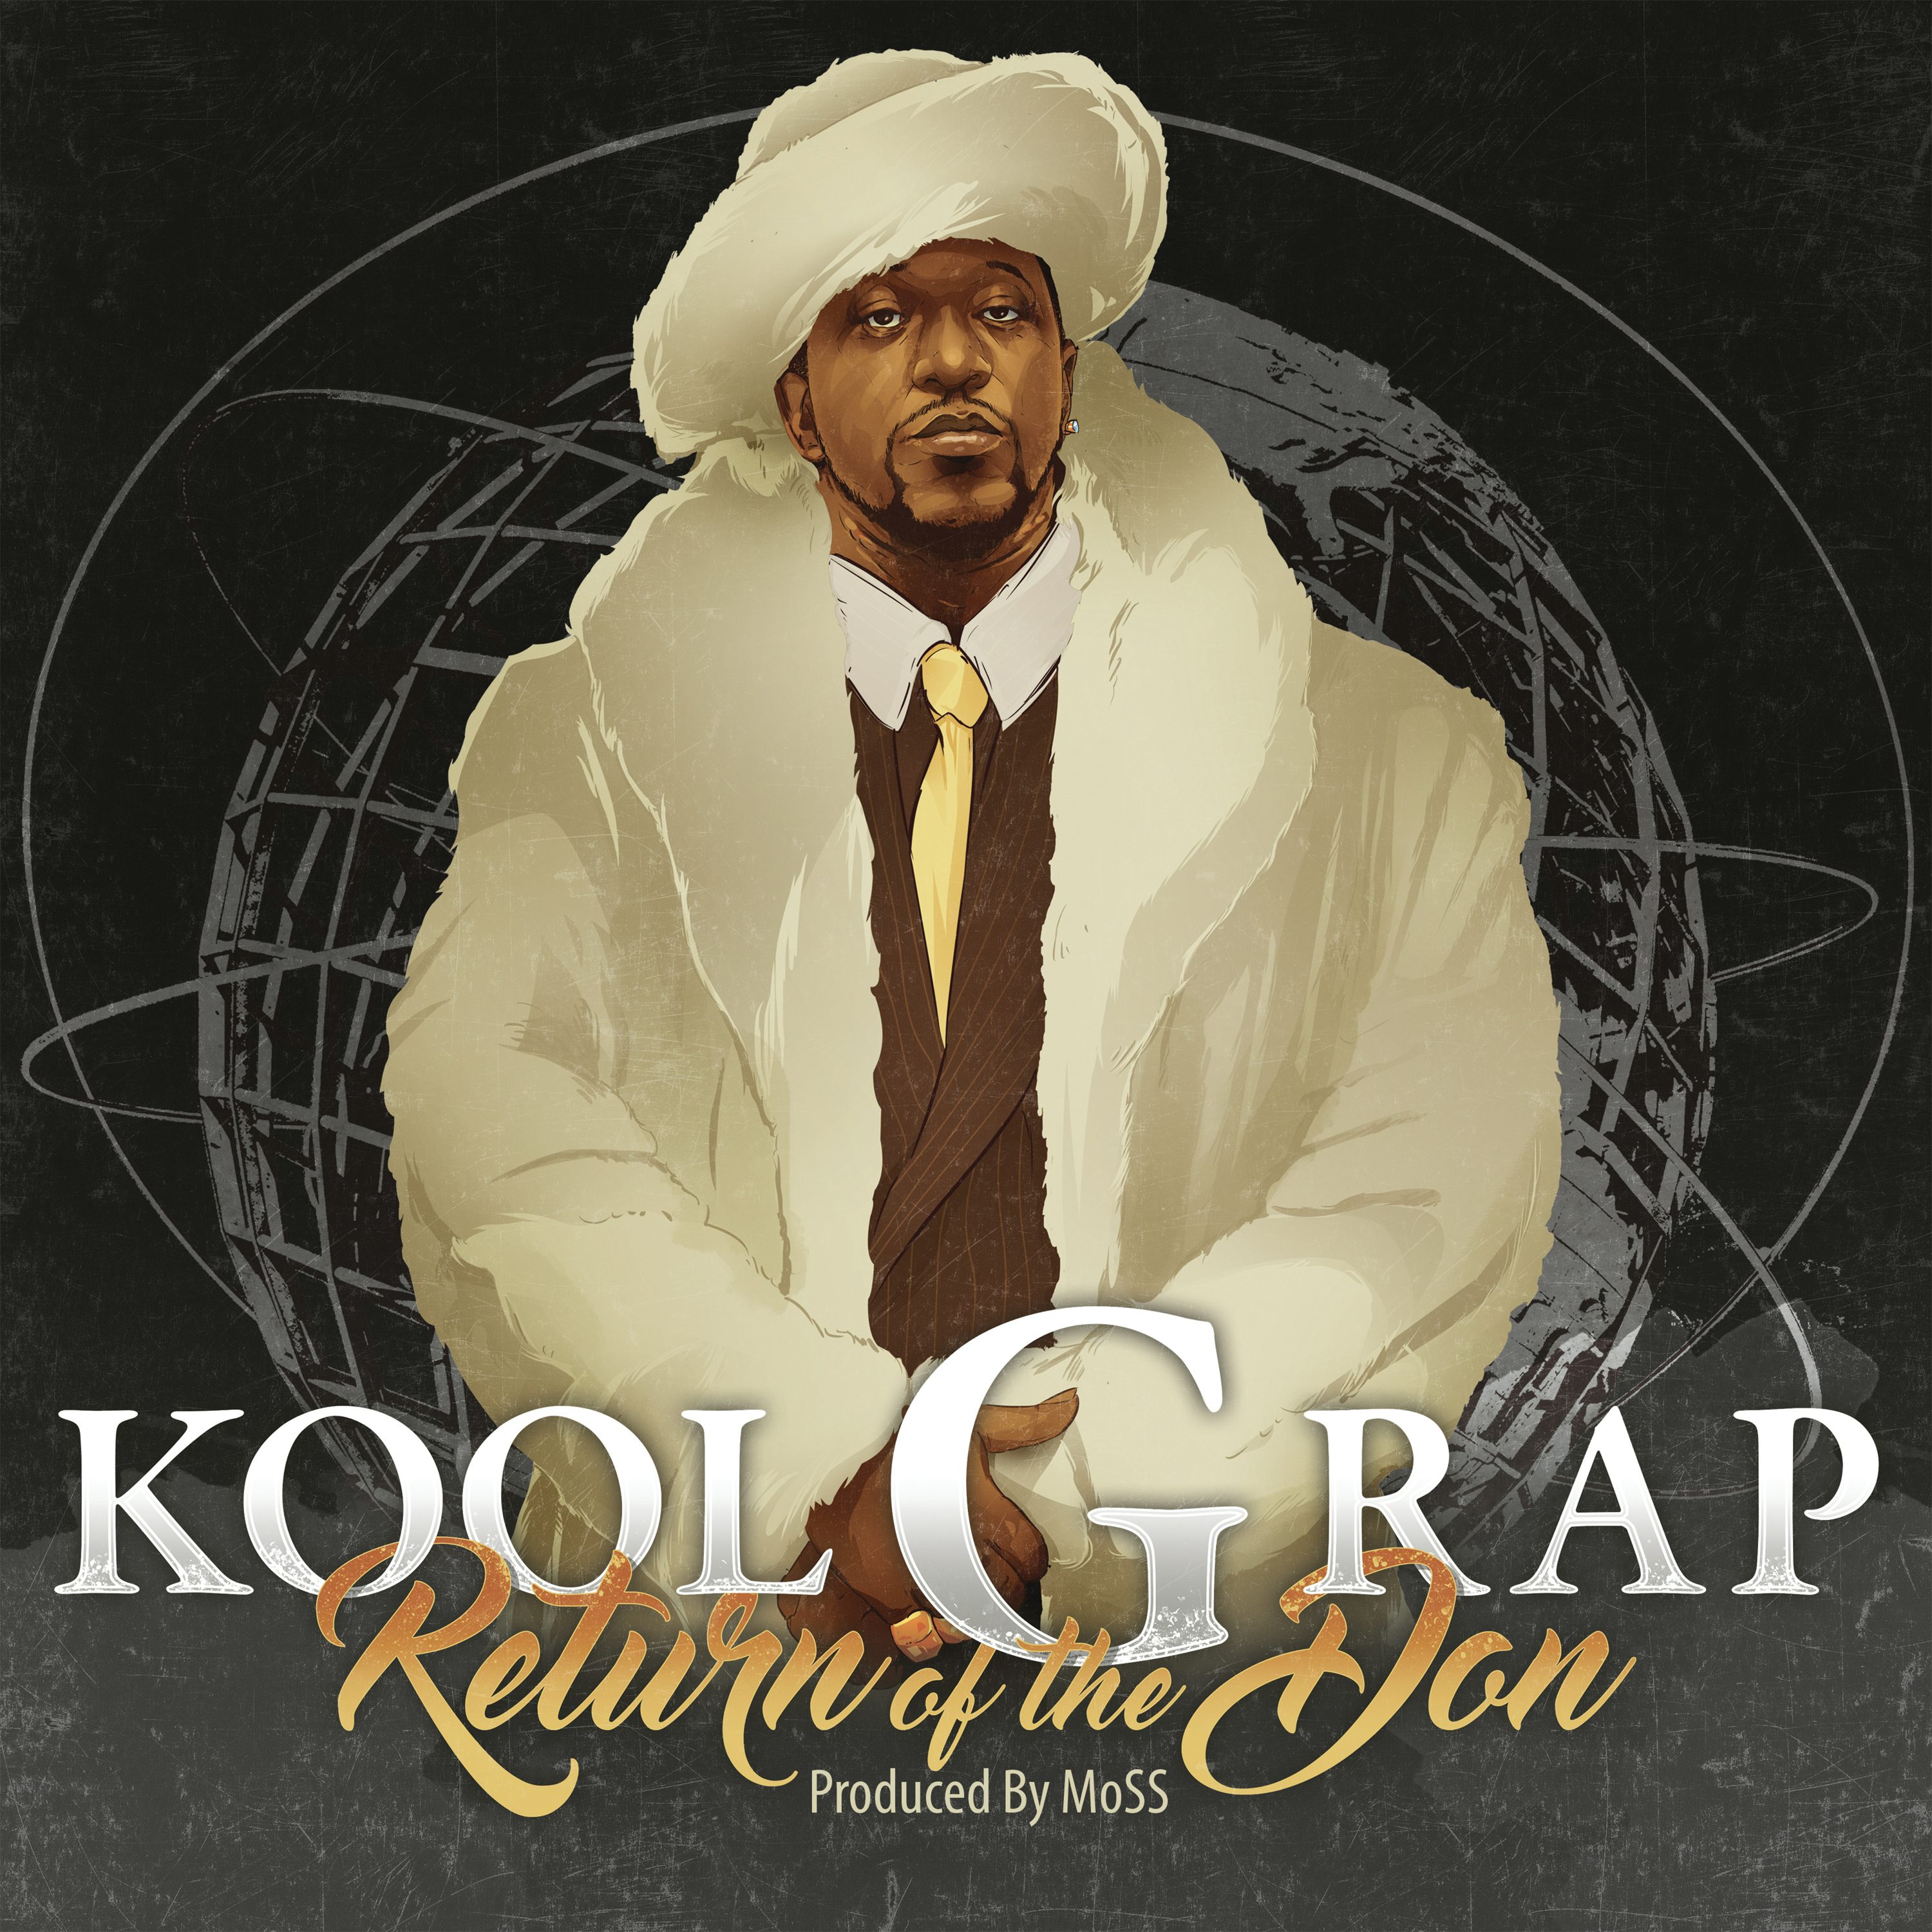 Kool G Rap RETURN OF THE DON CD